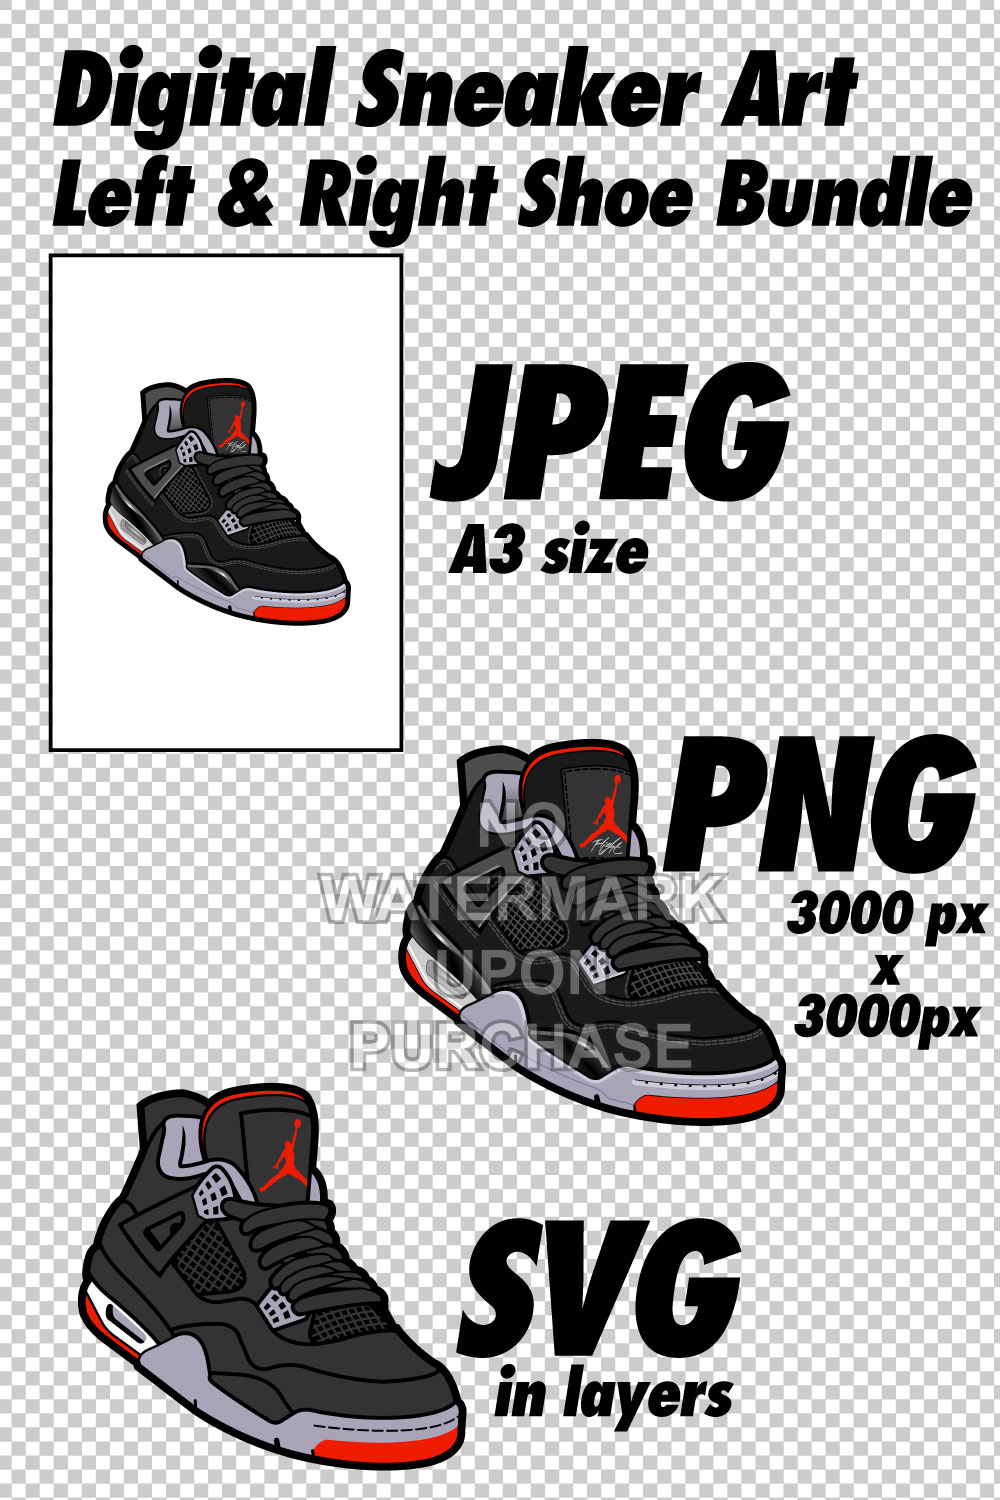 Air Jordan 4 Bred JPEG PNG SVG Sneaker Art Right & Left shoe bundle with lace swap Digital Download pinterest preview image.